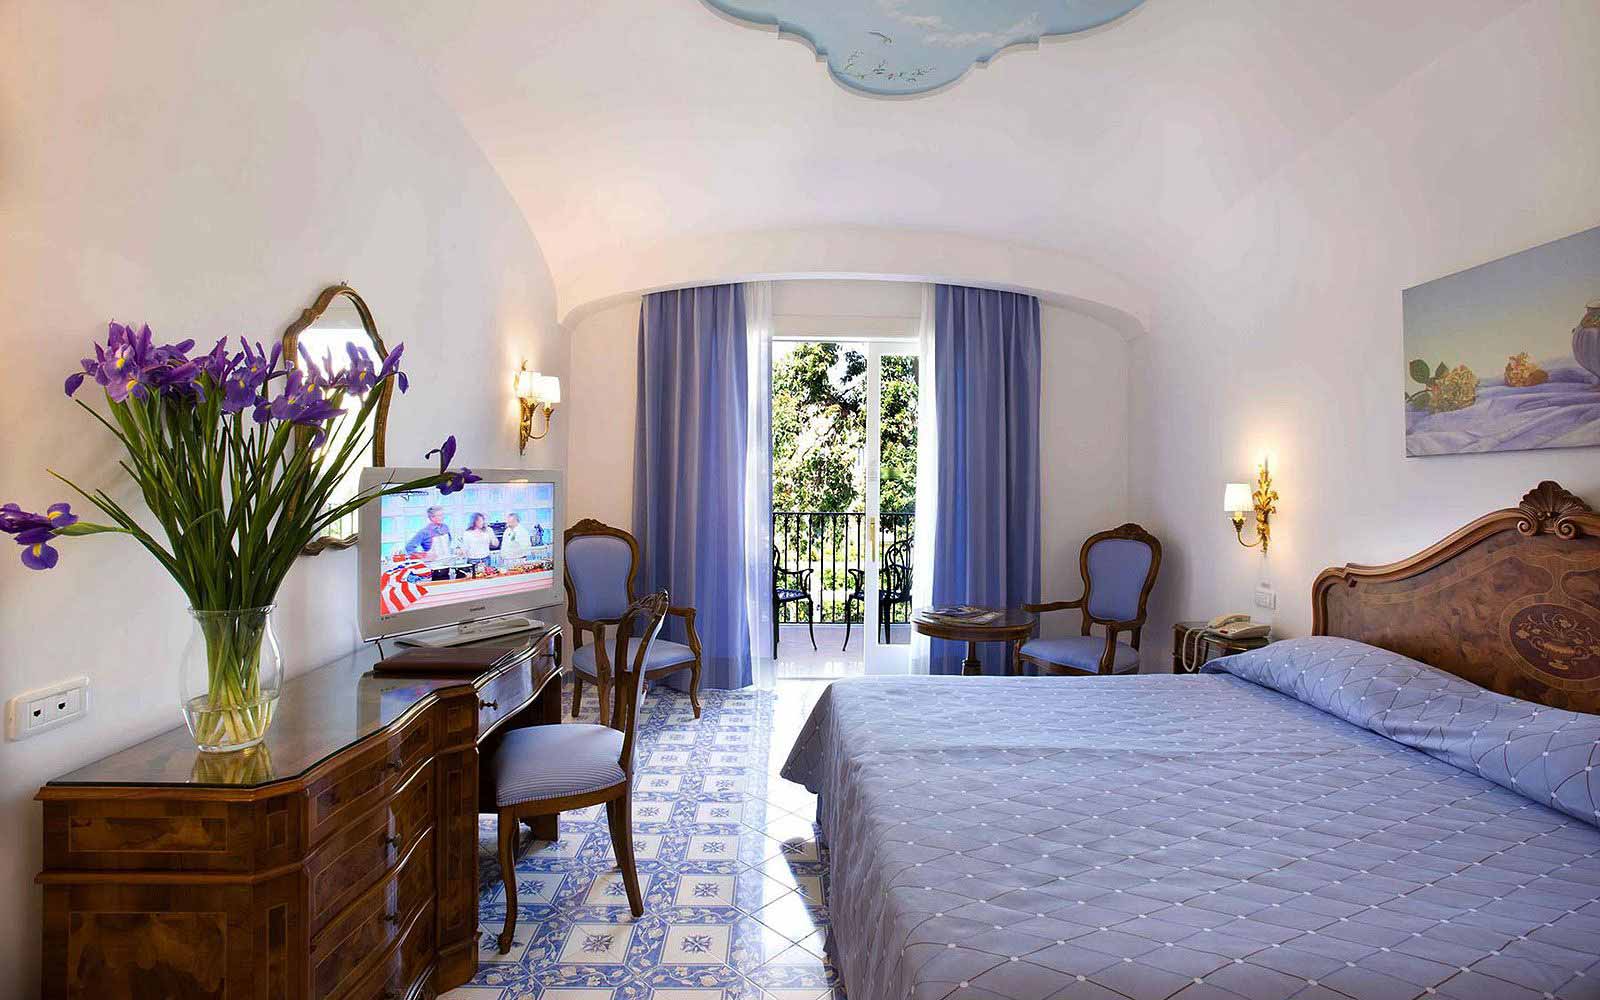 Superior Room at the Grand Hotel La Favorita